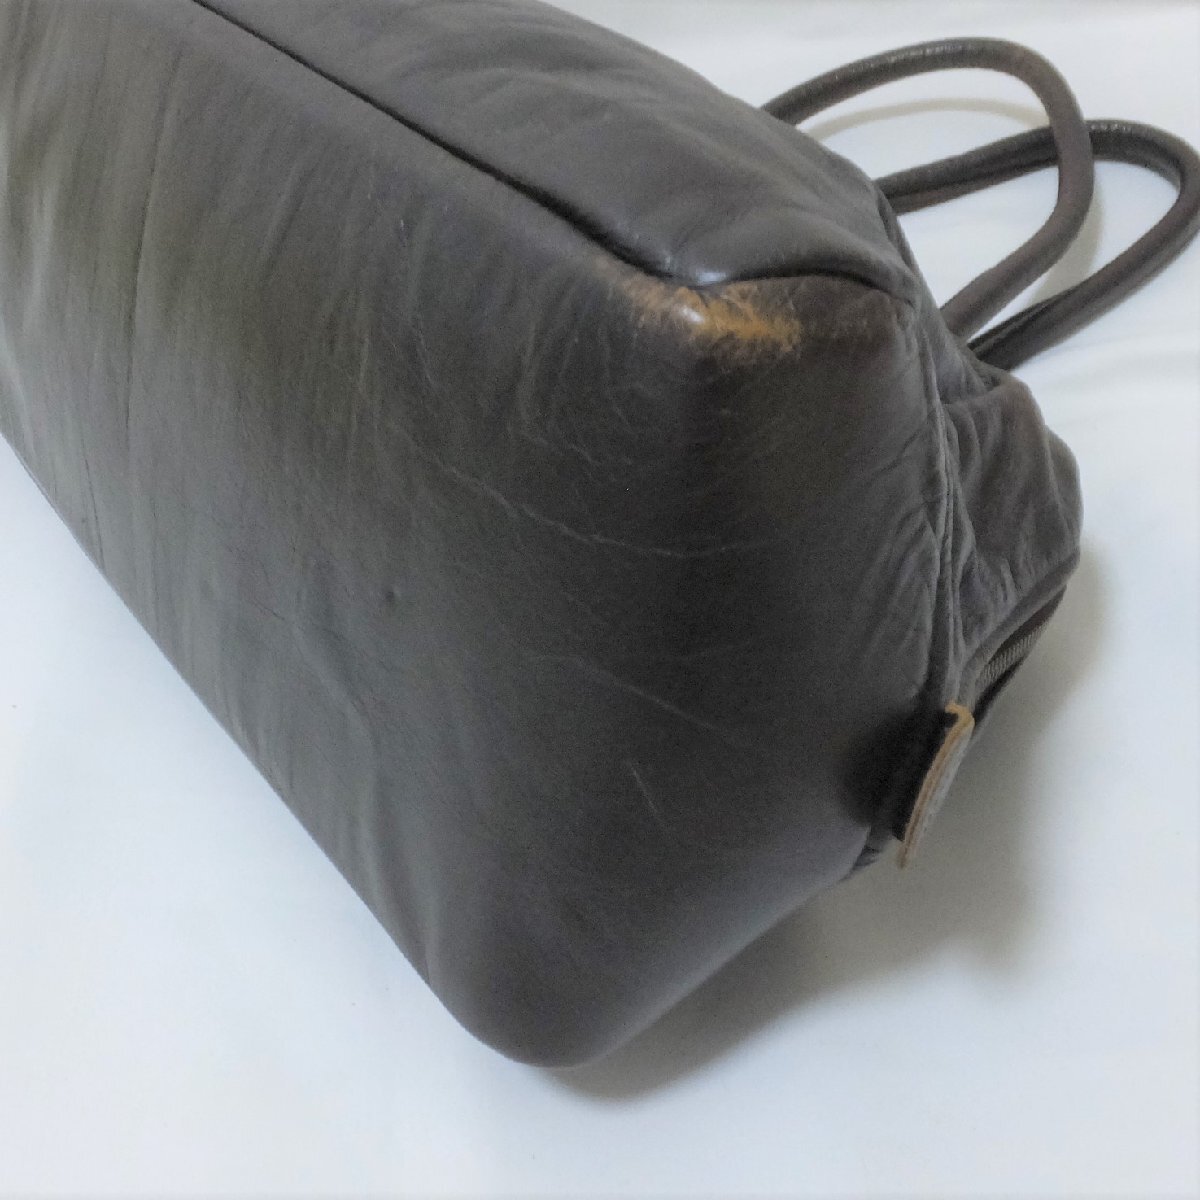 Q257 Jas MB JAS-MB Brown Boston bag shoulder bag leather 